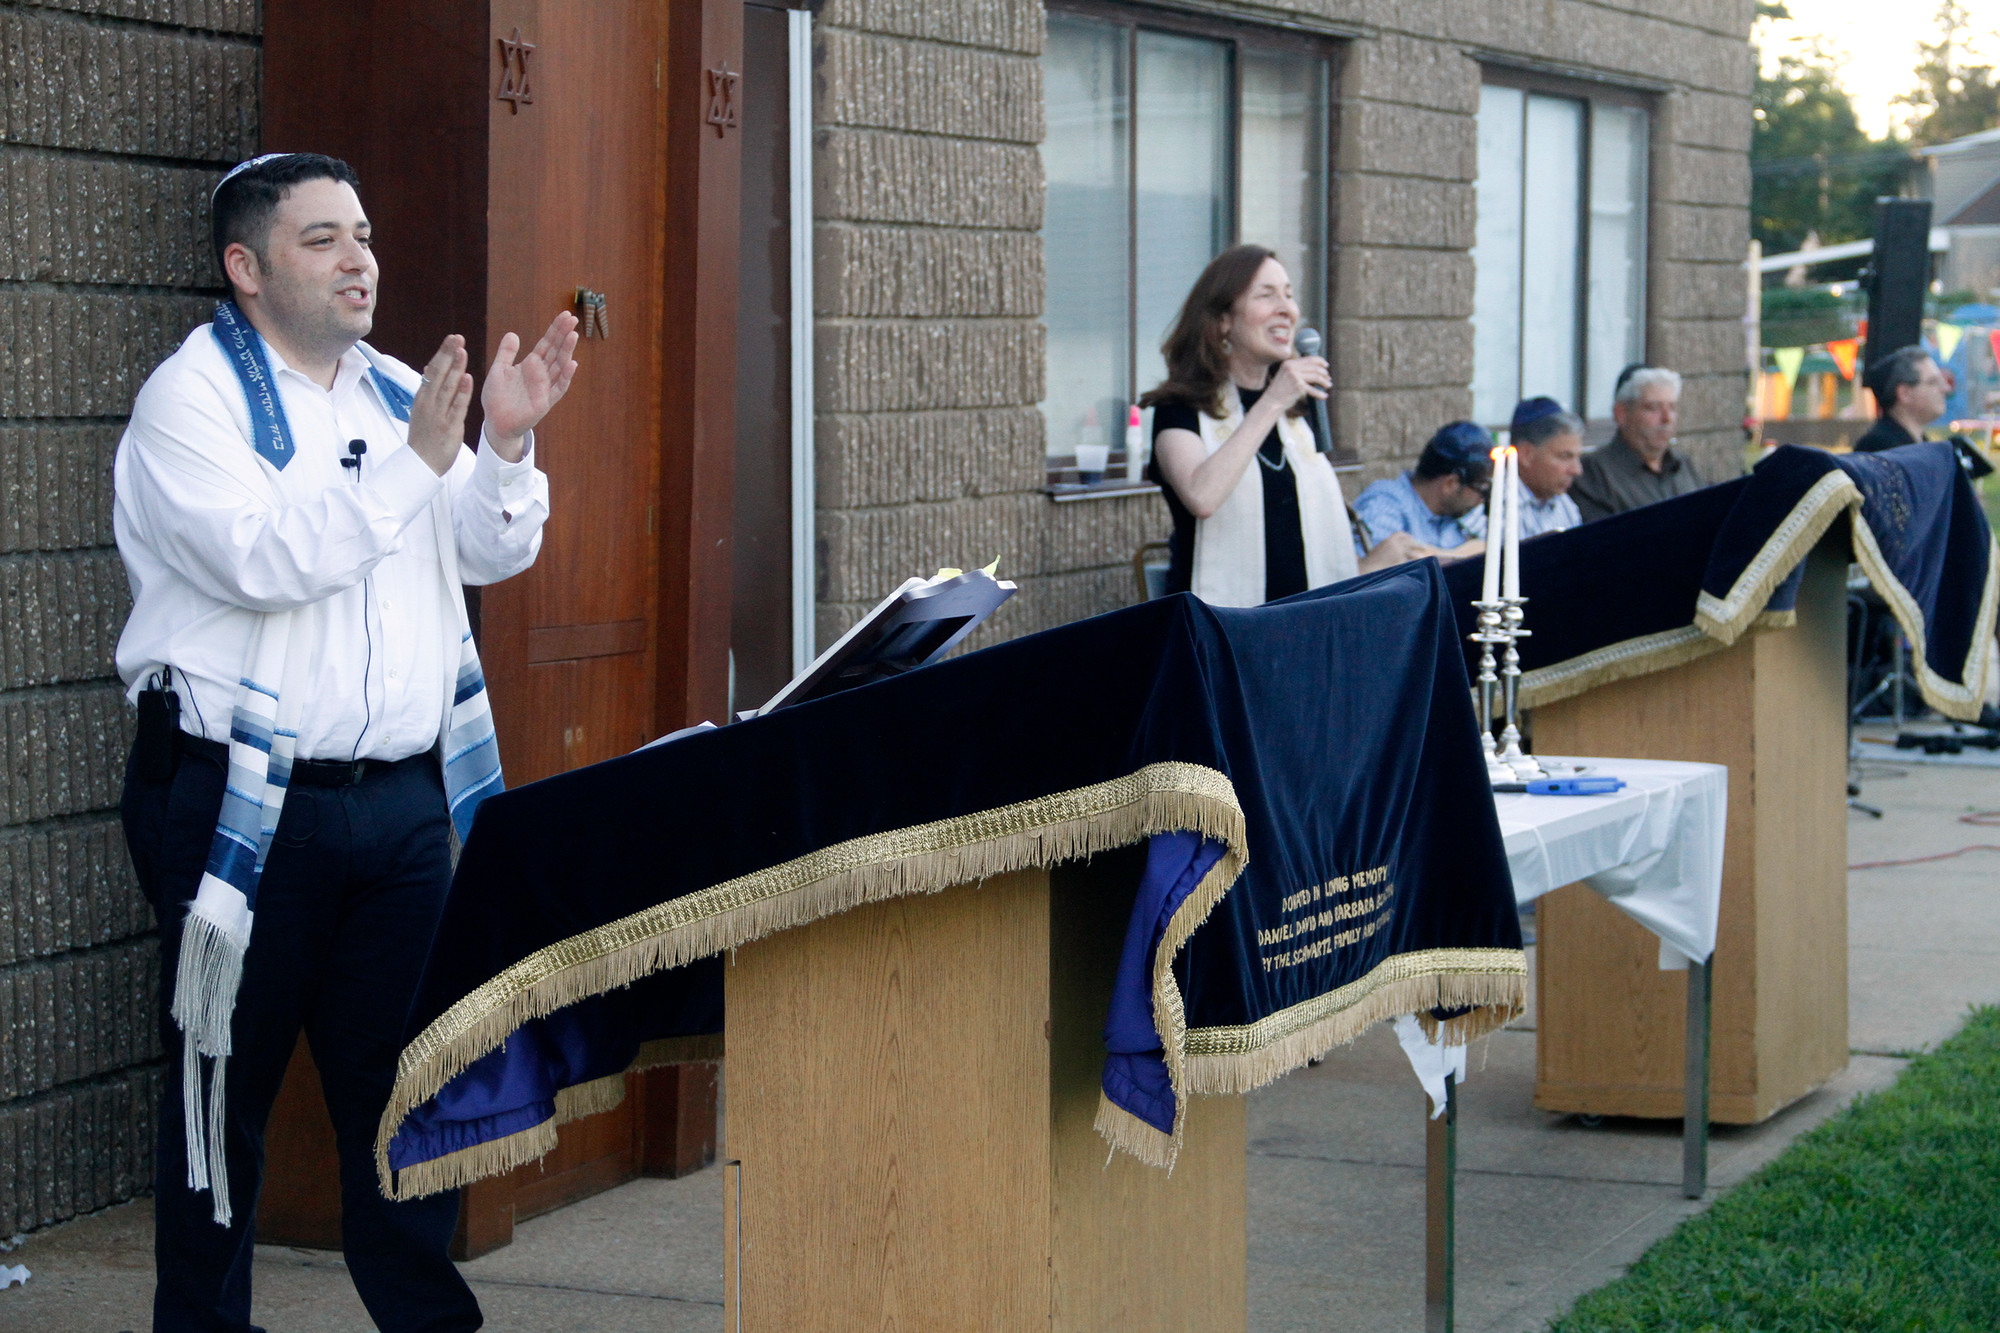 Rabbi Daniel Bar-Nahum and Cantor Ellen Weinberg led the congregation in song.